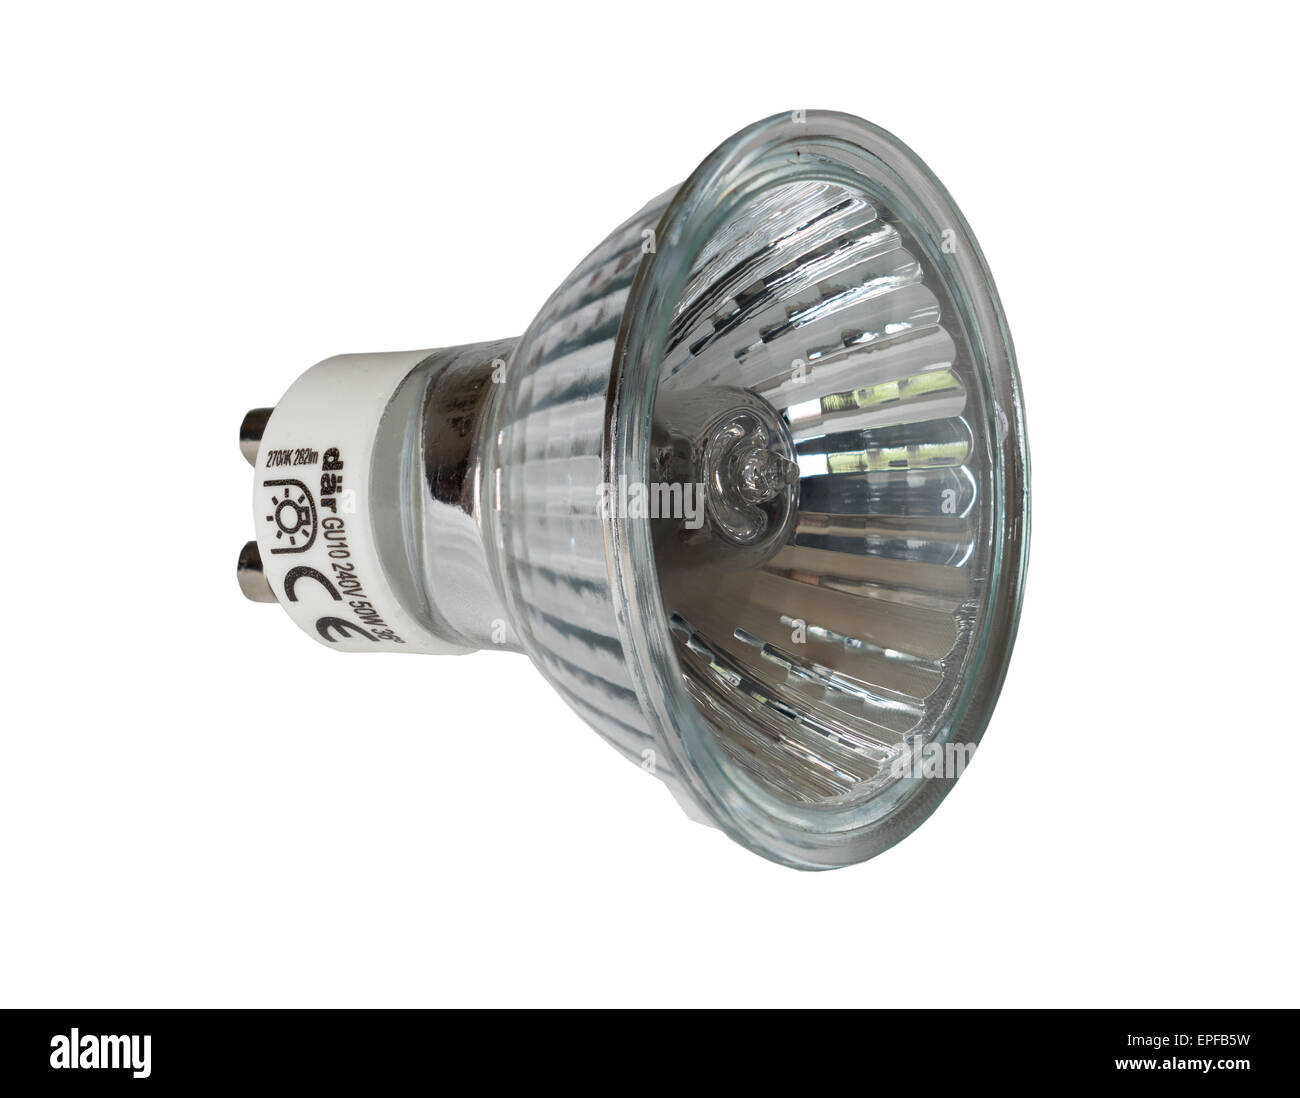 DAR 50W GU10 240V halogen light bulb isolated on a white background Stock Photo